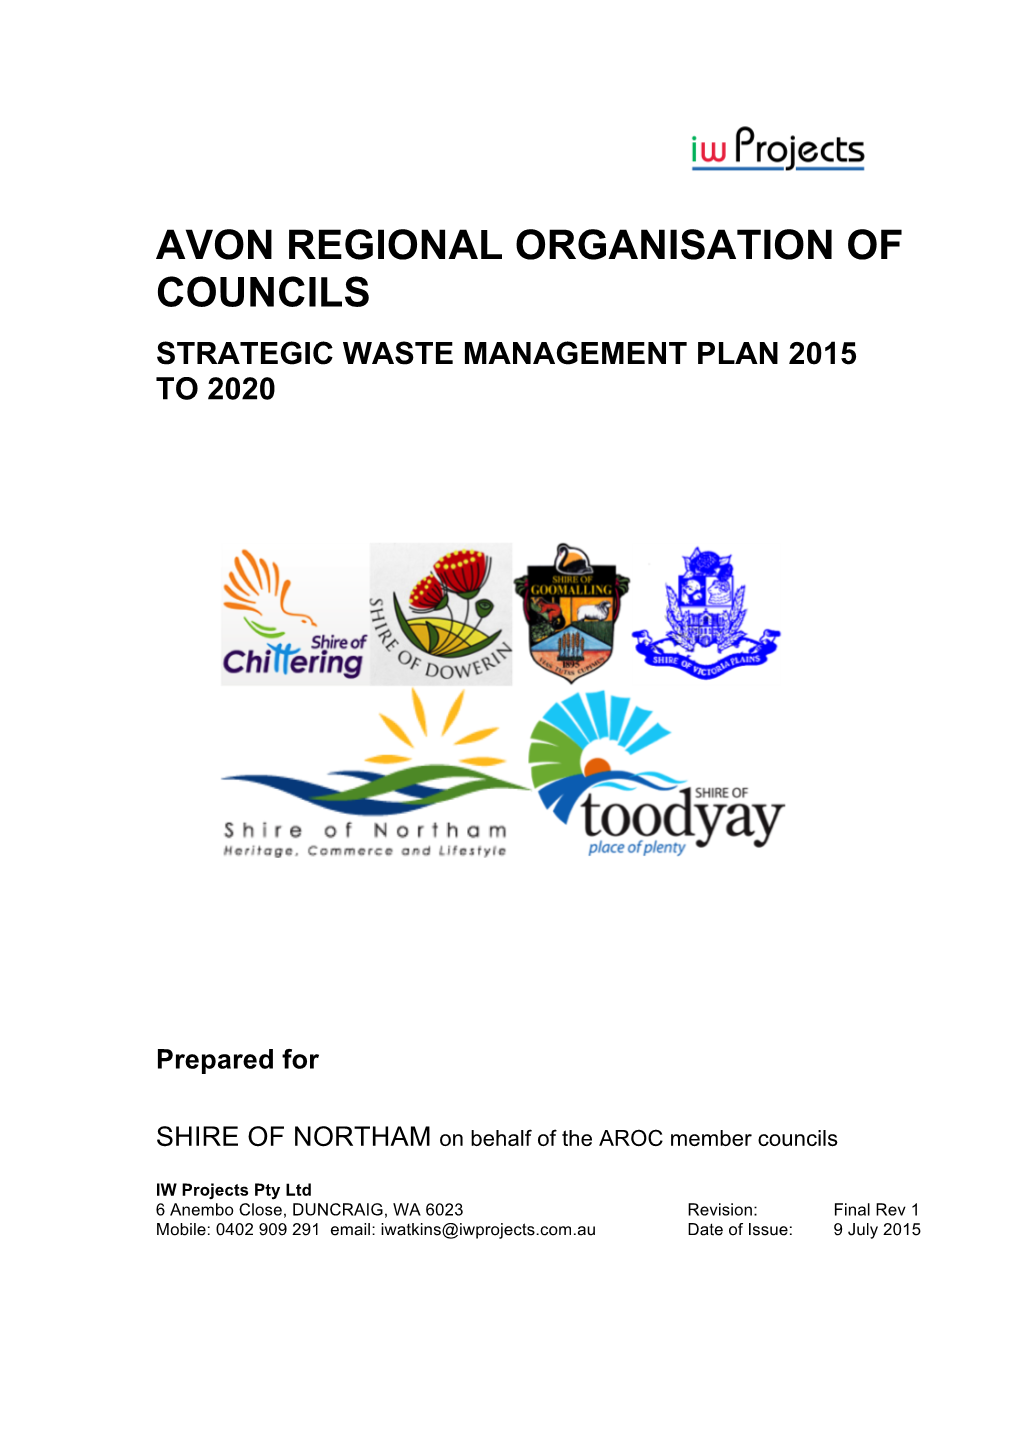 Avon Regional Organisation of Councils